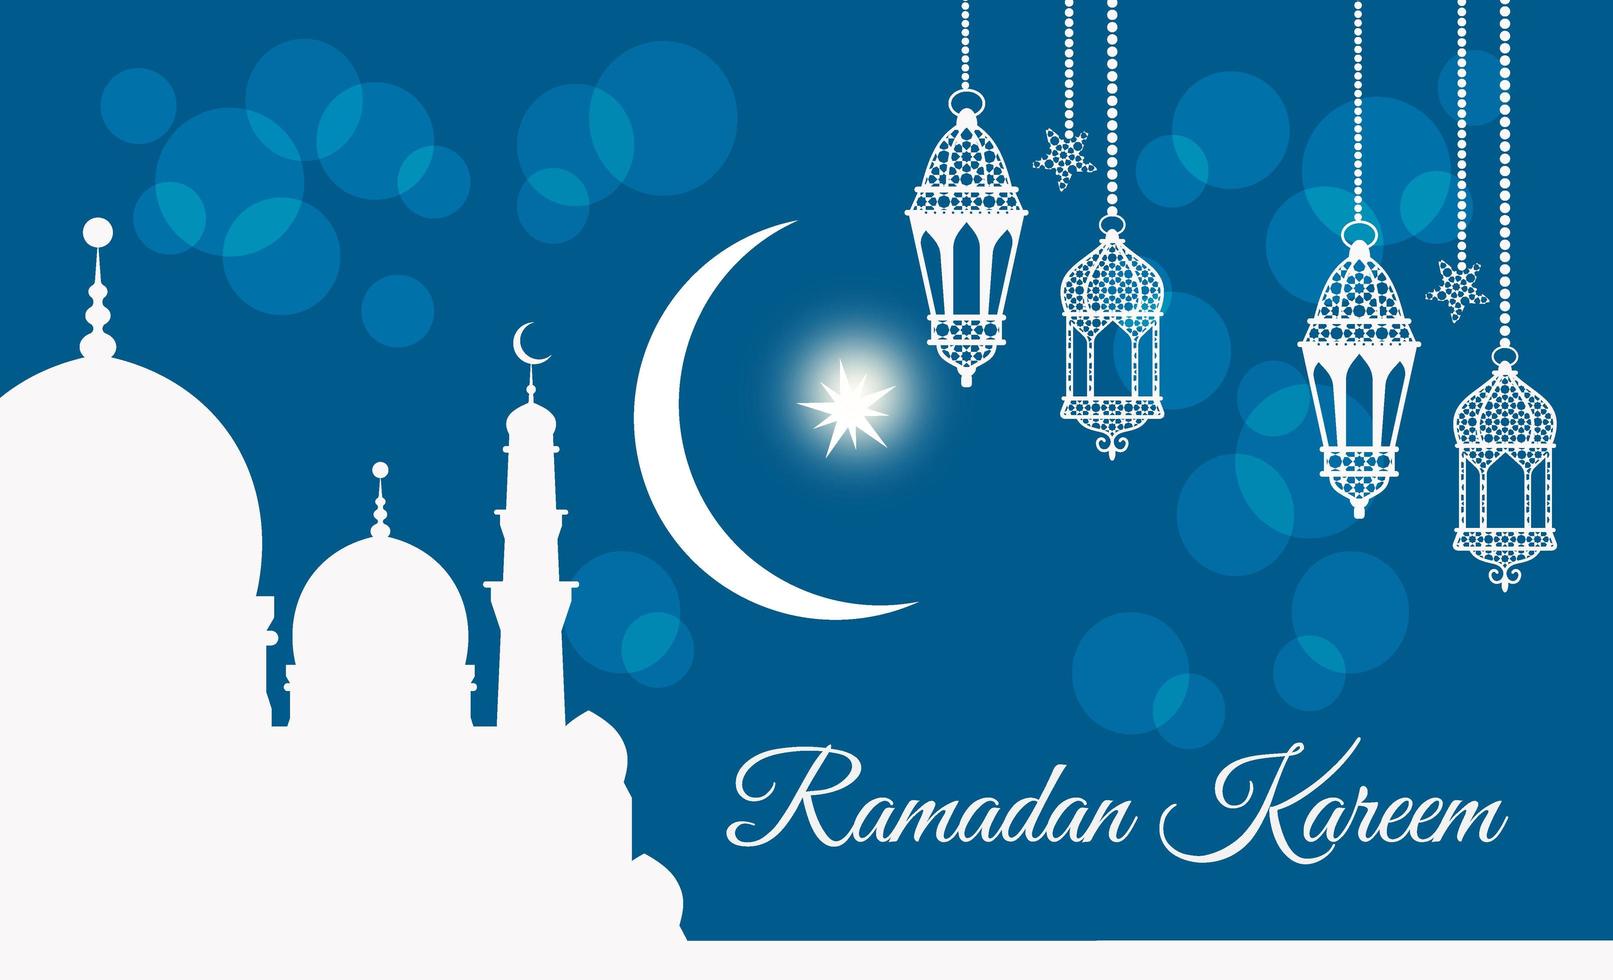 benvenuto, Ramadan Kareem vettore